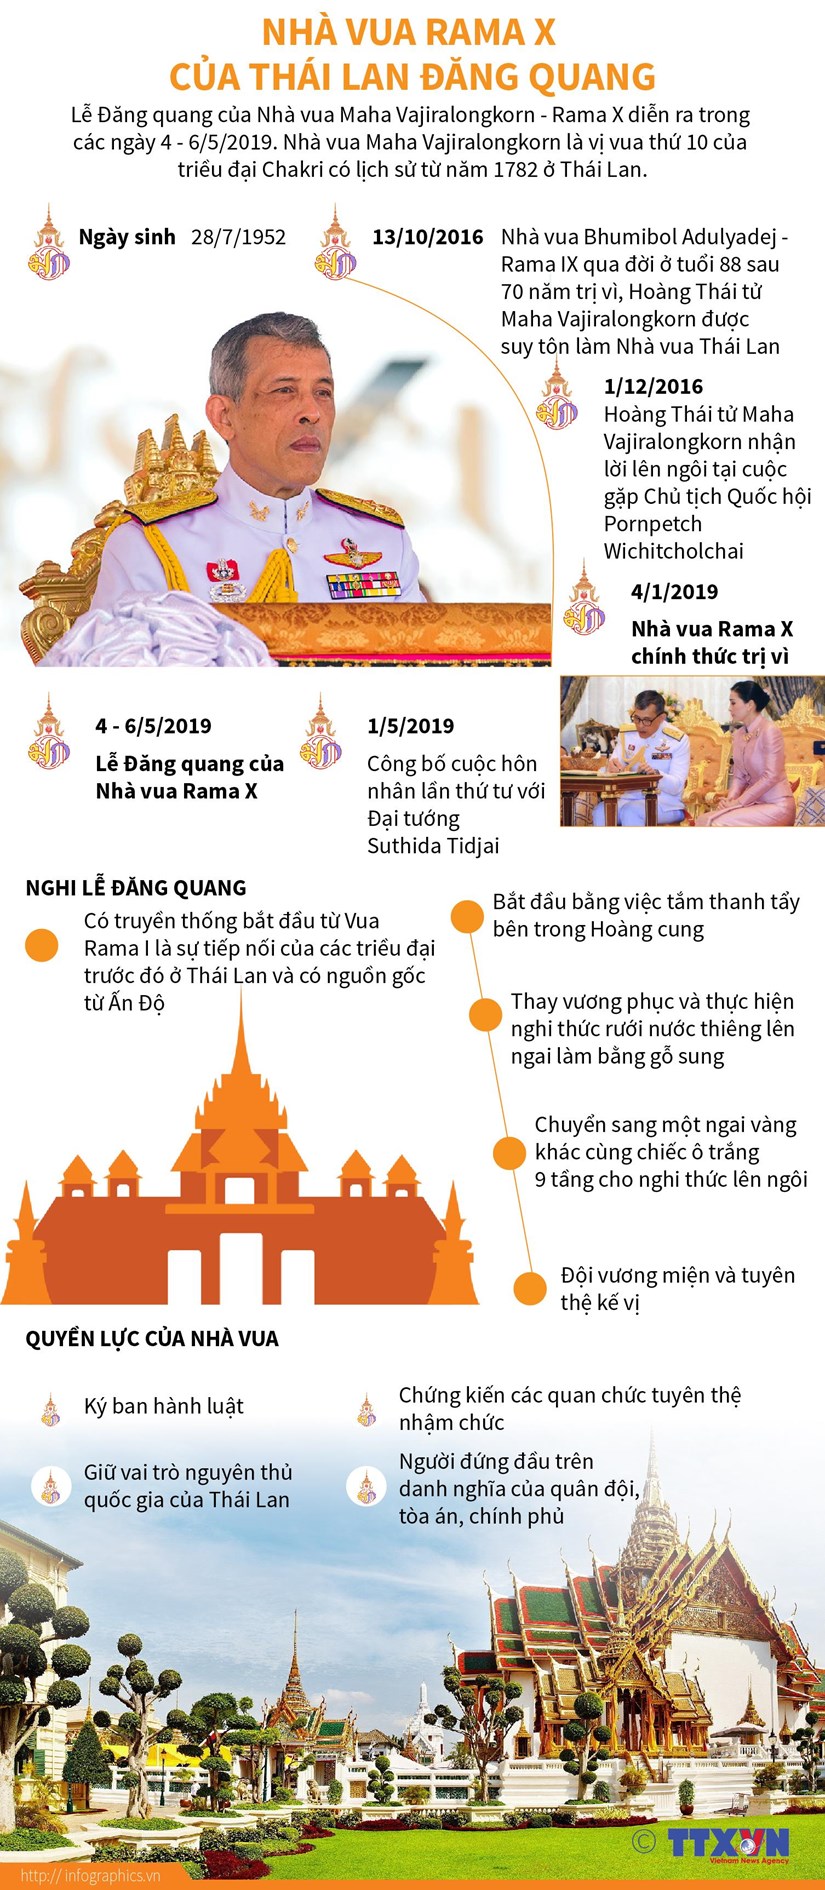 [Infographics] Quyen luc cua Nha vua Thai Lan sau khi dang quang hinh anh 1